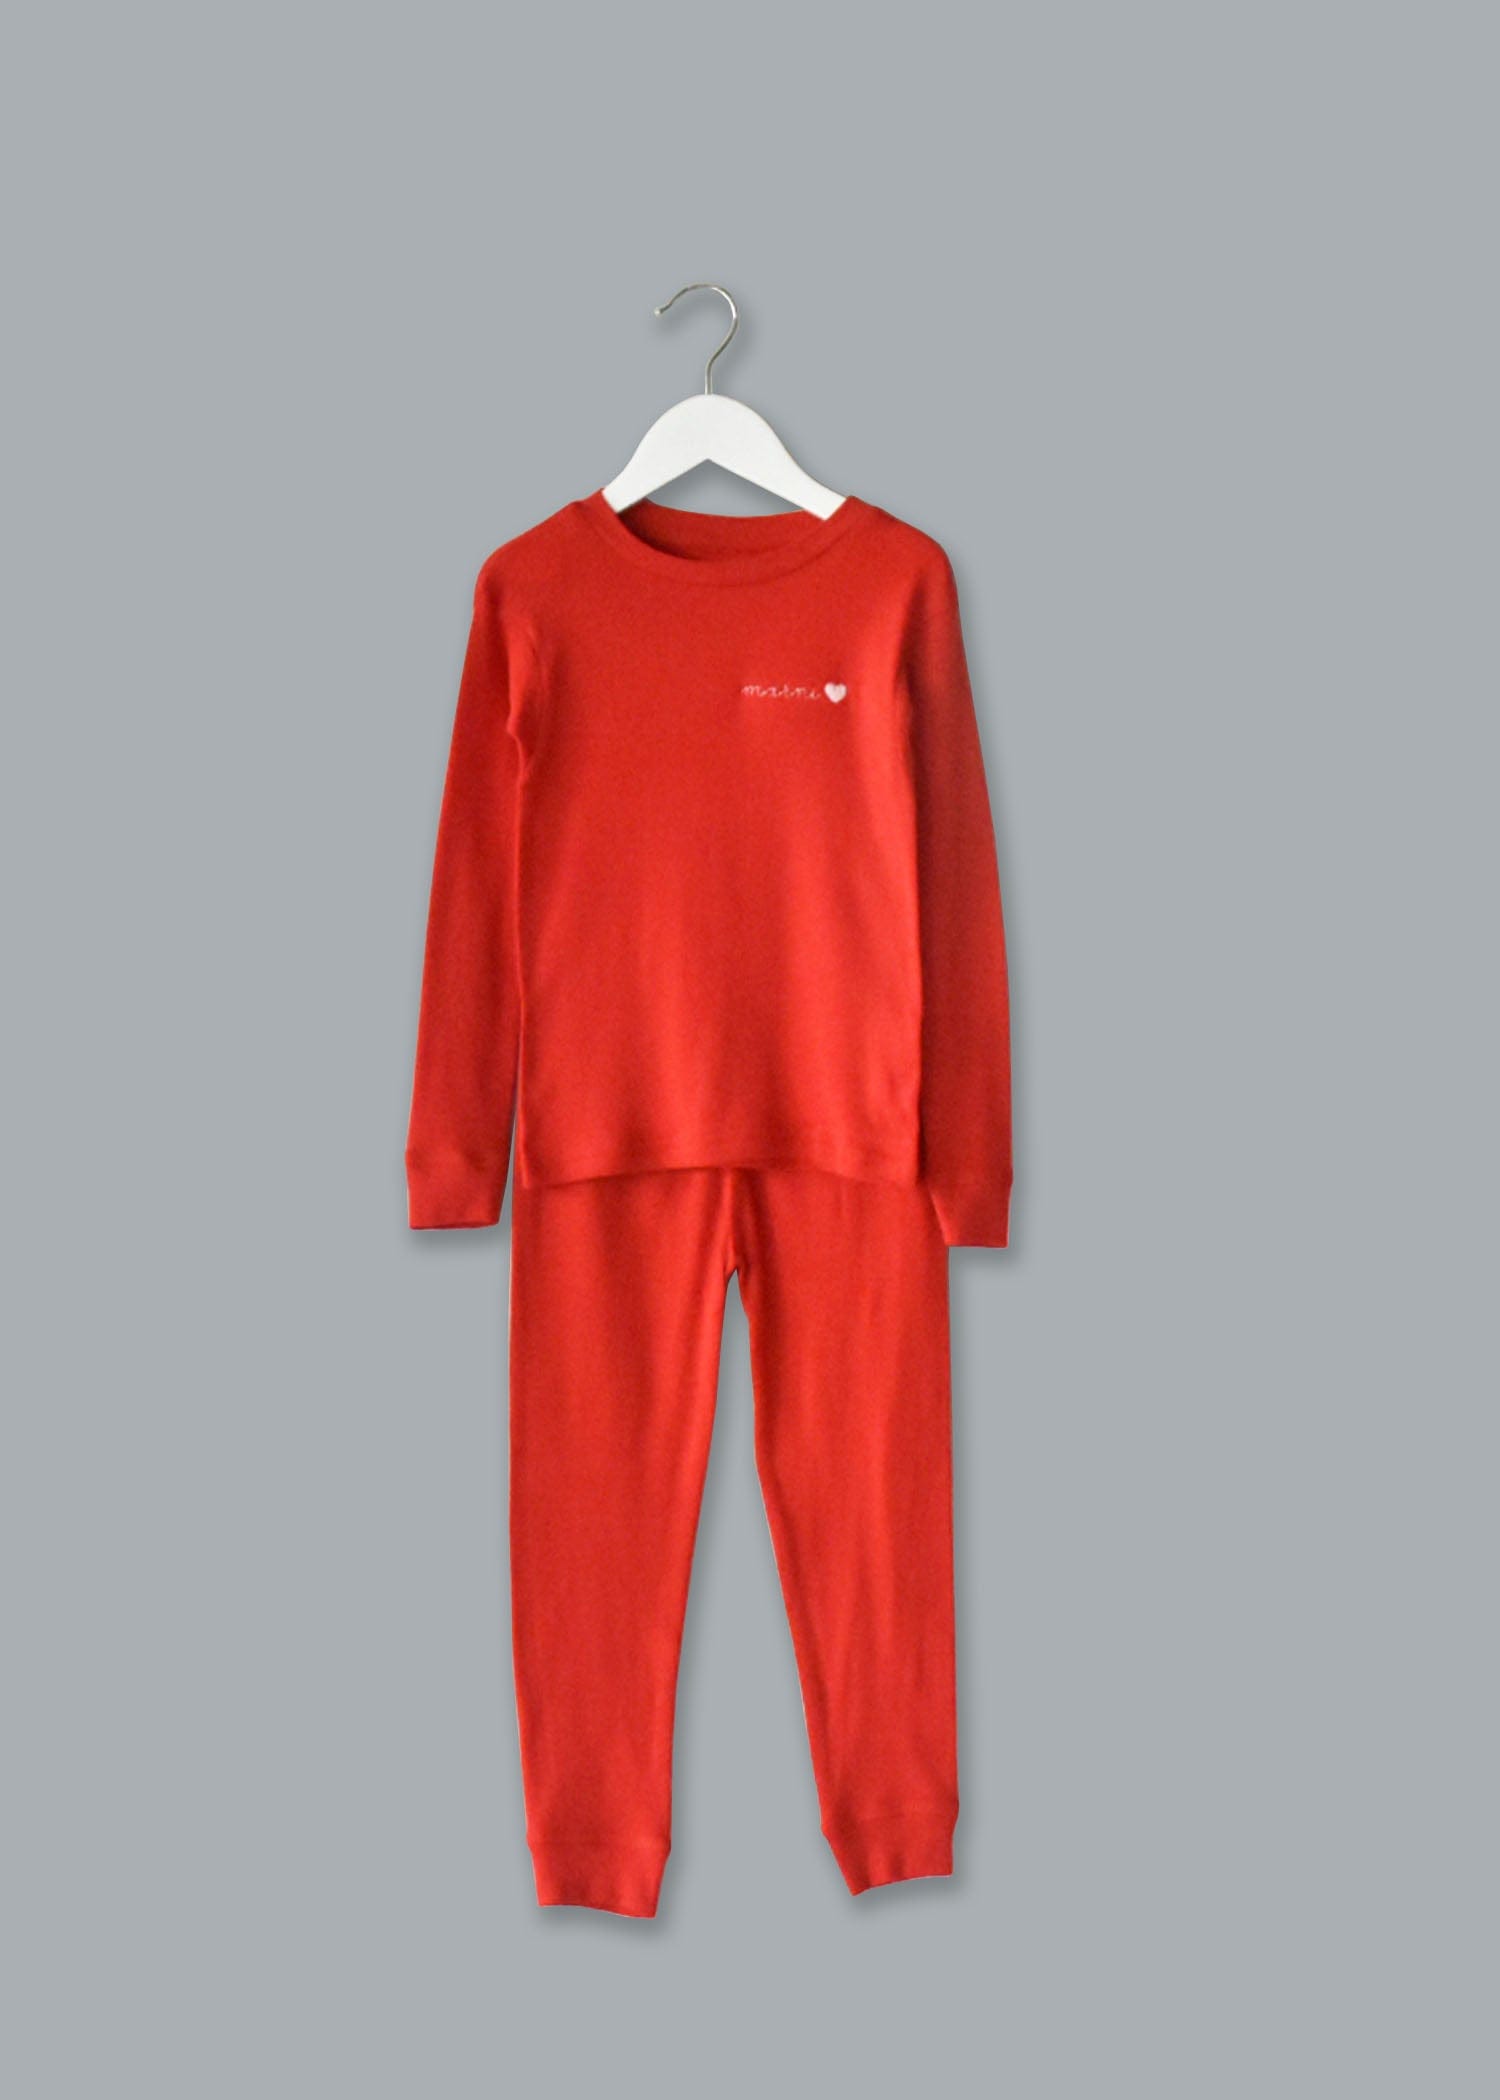 Personalized Pajamas for Women Red Pajama Set Monogrammed 